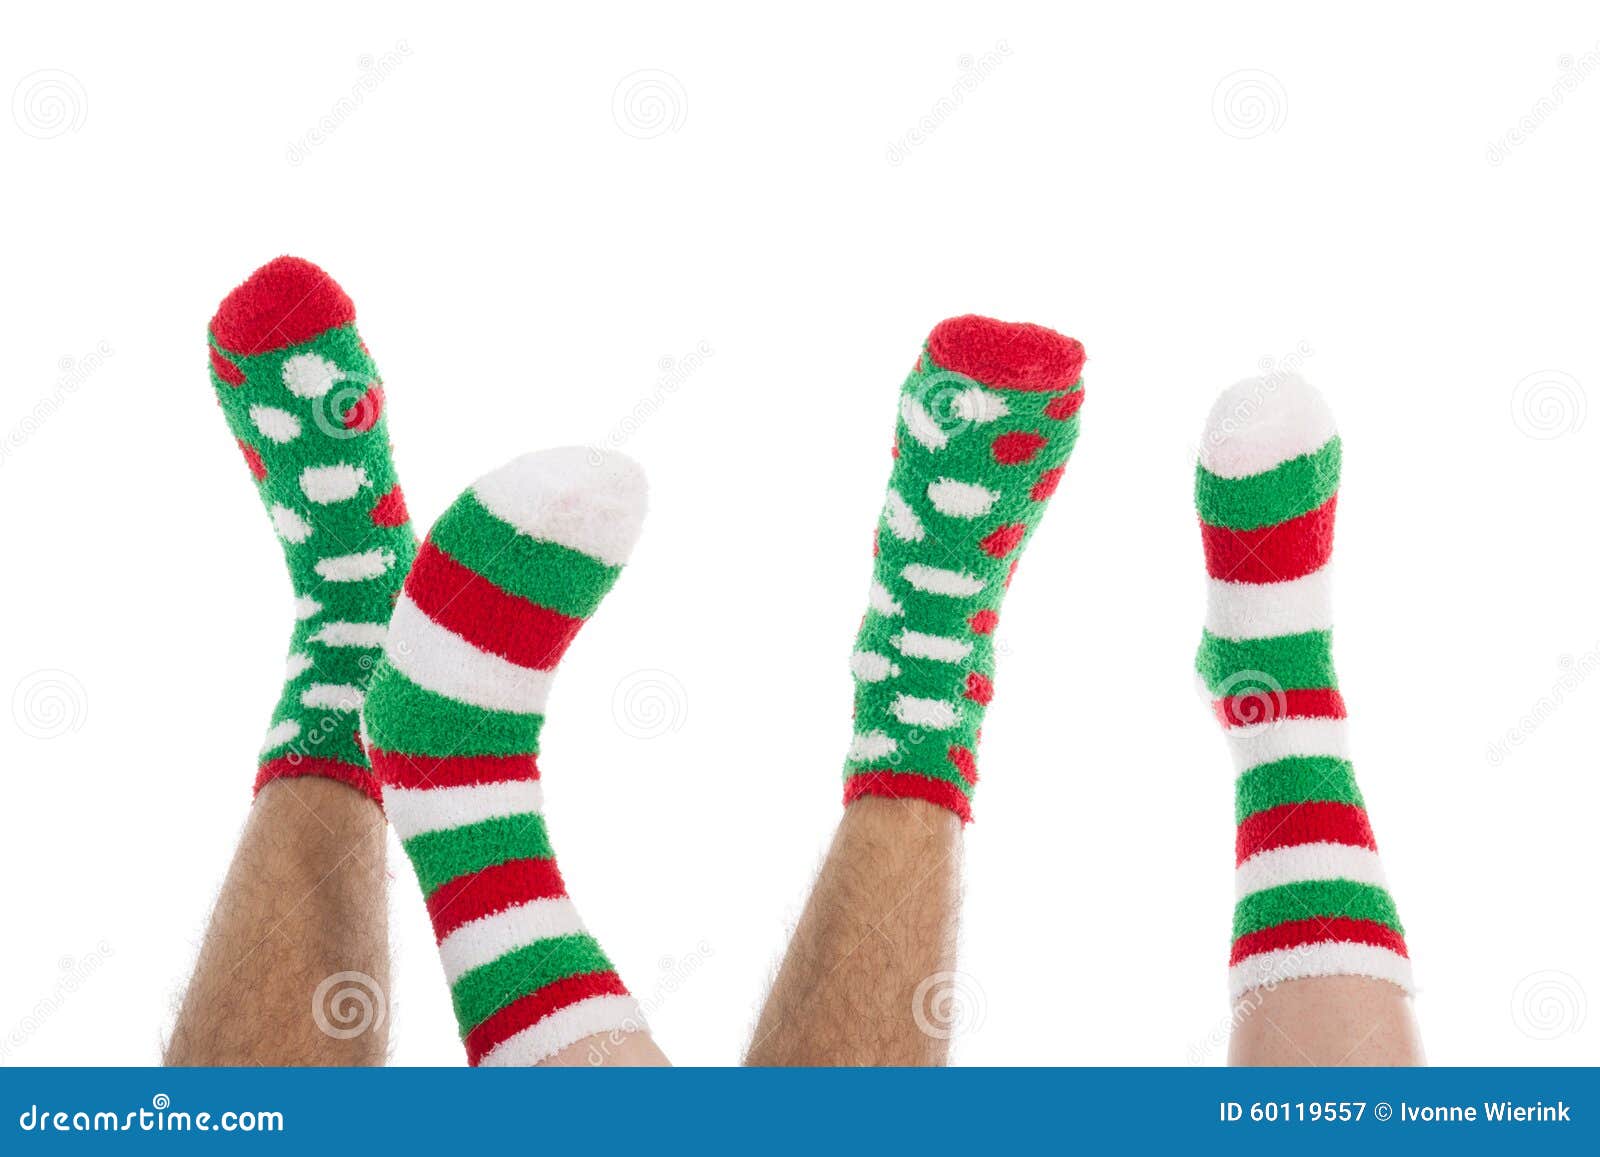 Christmas fun stock image. Image of white, pairs, male - 60119557